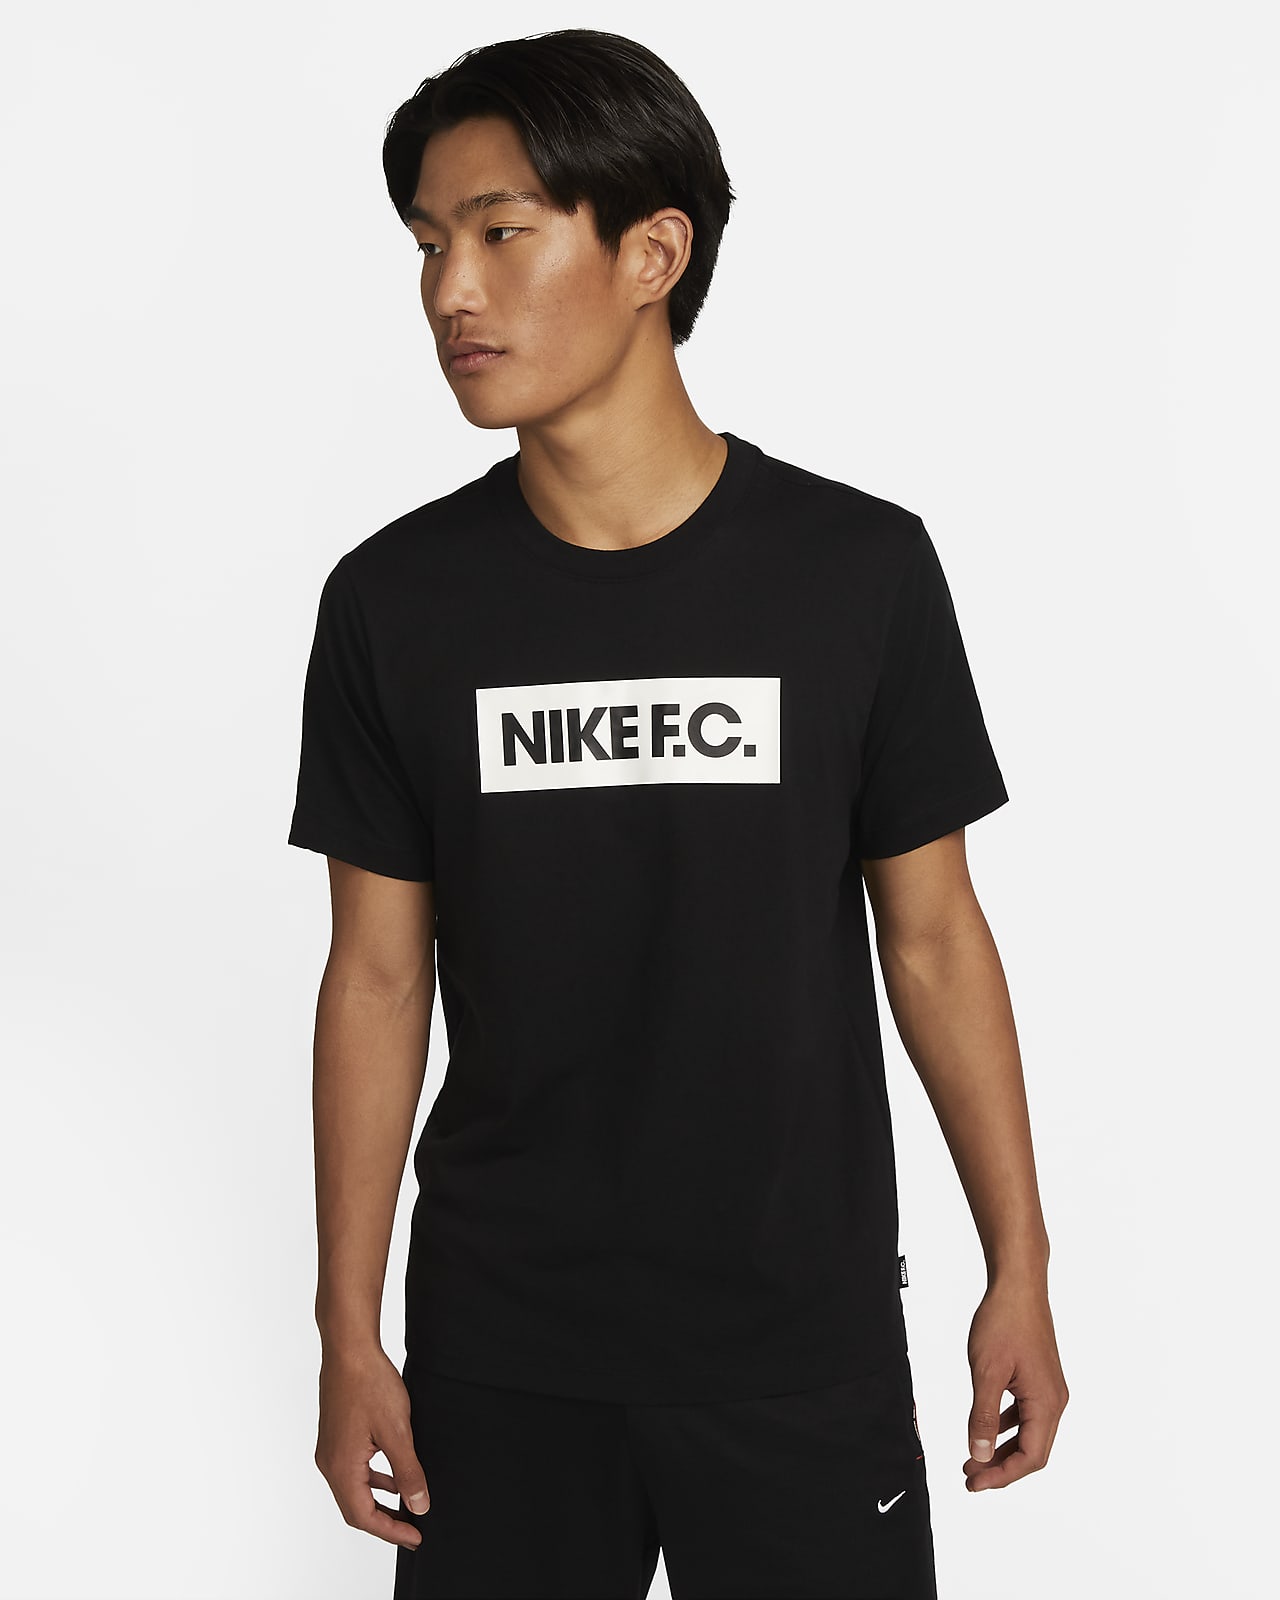 Nike F.C. Men's Football T-Shirt. ID